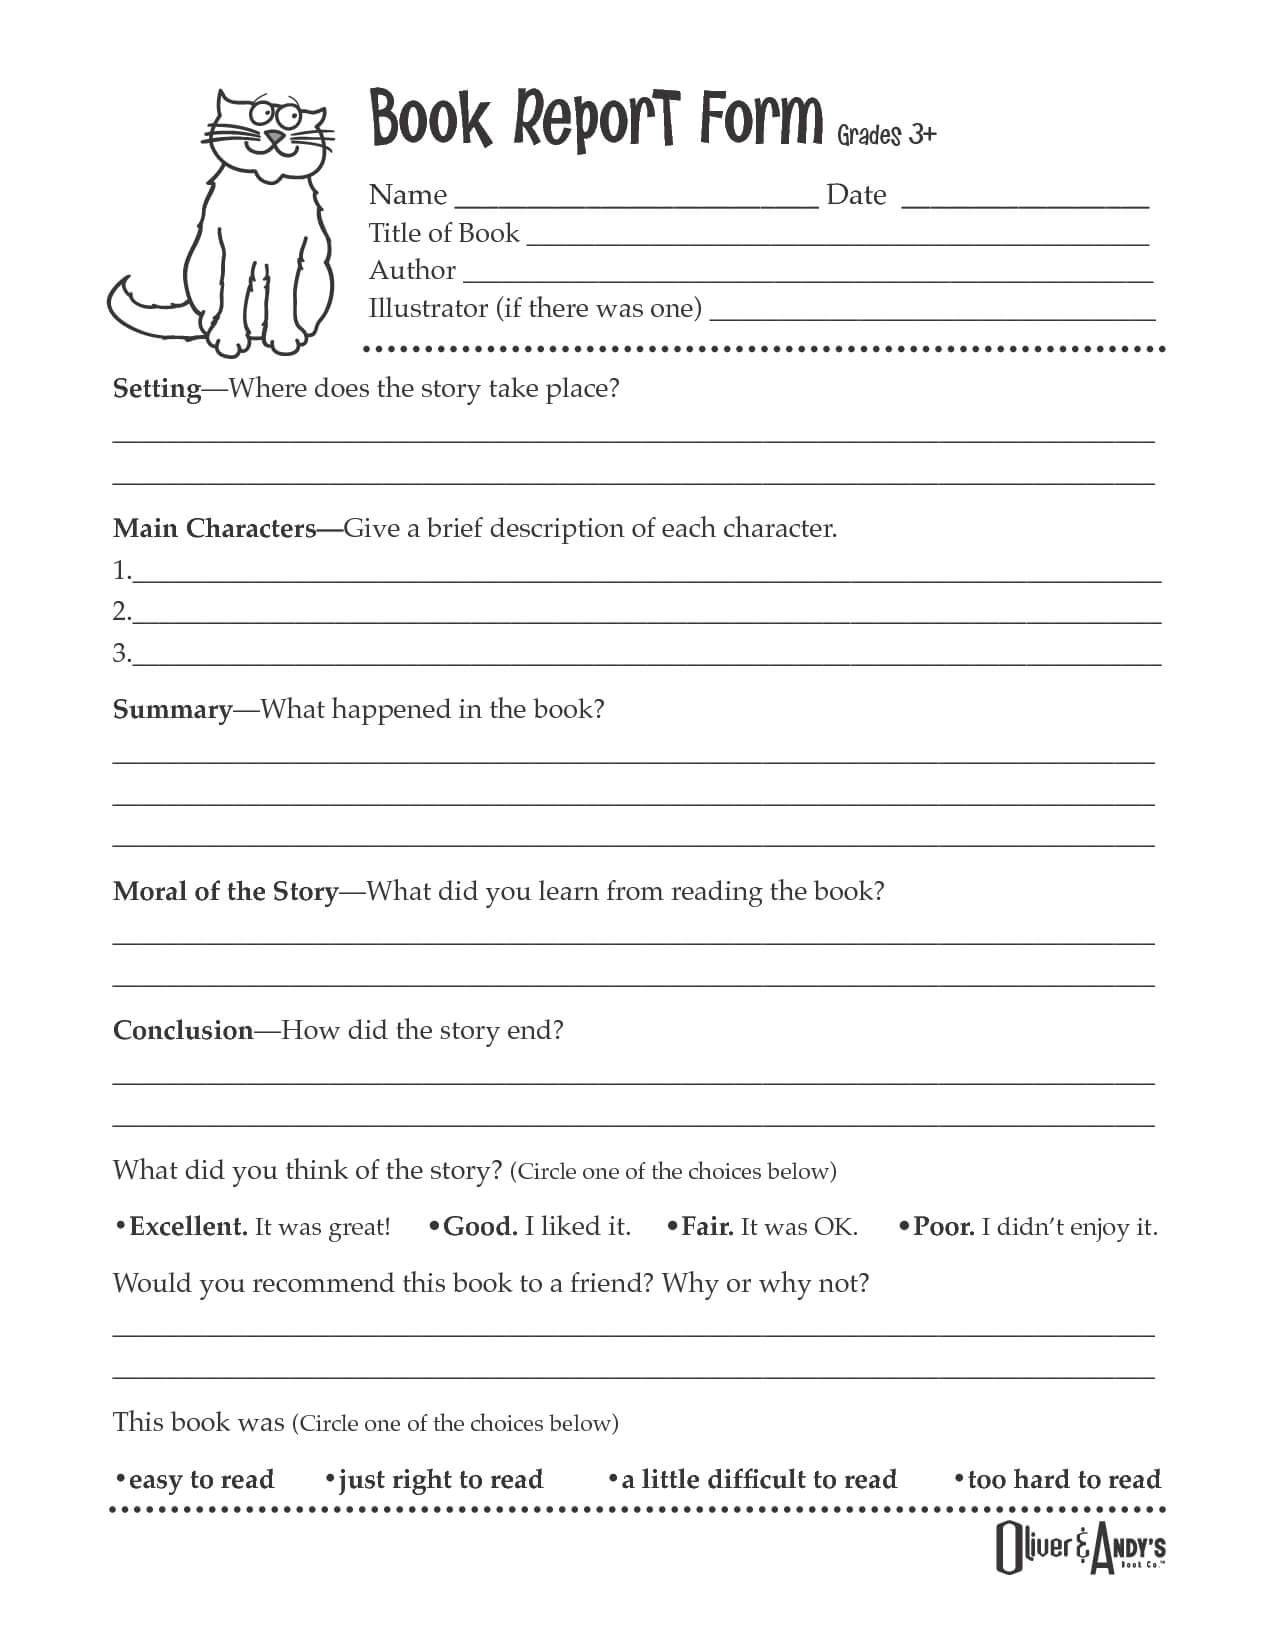 Second Grade Book Report Template | Book Report Form Grades Within Book Report Template 3Rd Grade